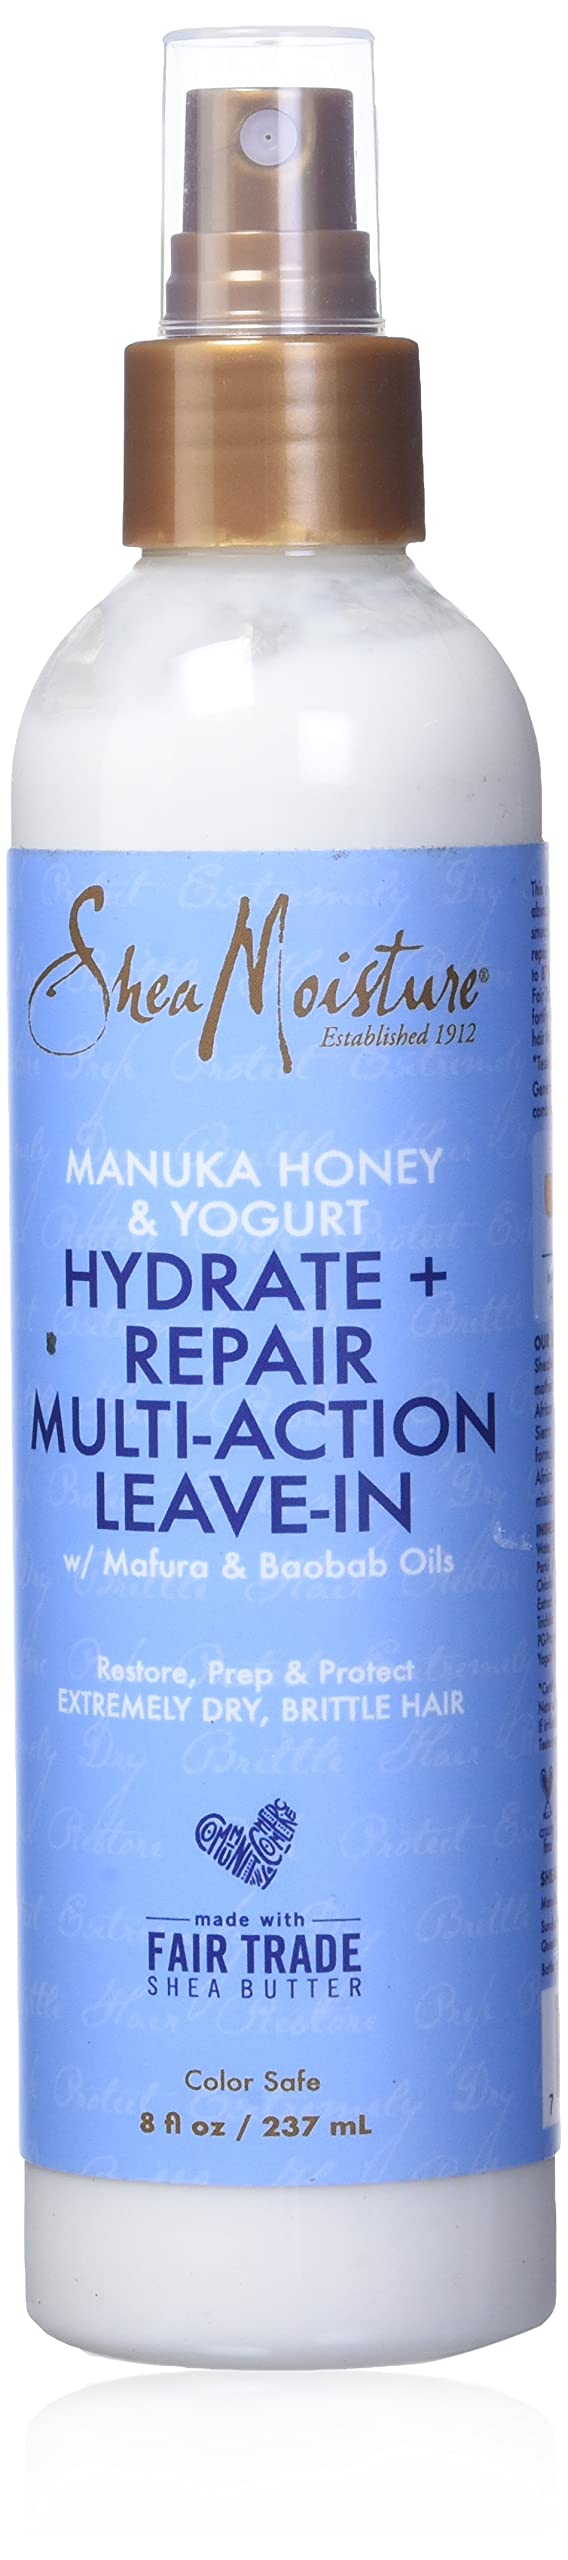 Manuka Honey and Yogurt Hydrate Plus Repair Multi-Action Leave-In by Shea Moisture for Unisex - 8 oz Treatment - BeesActive Australia